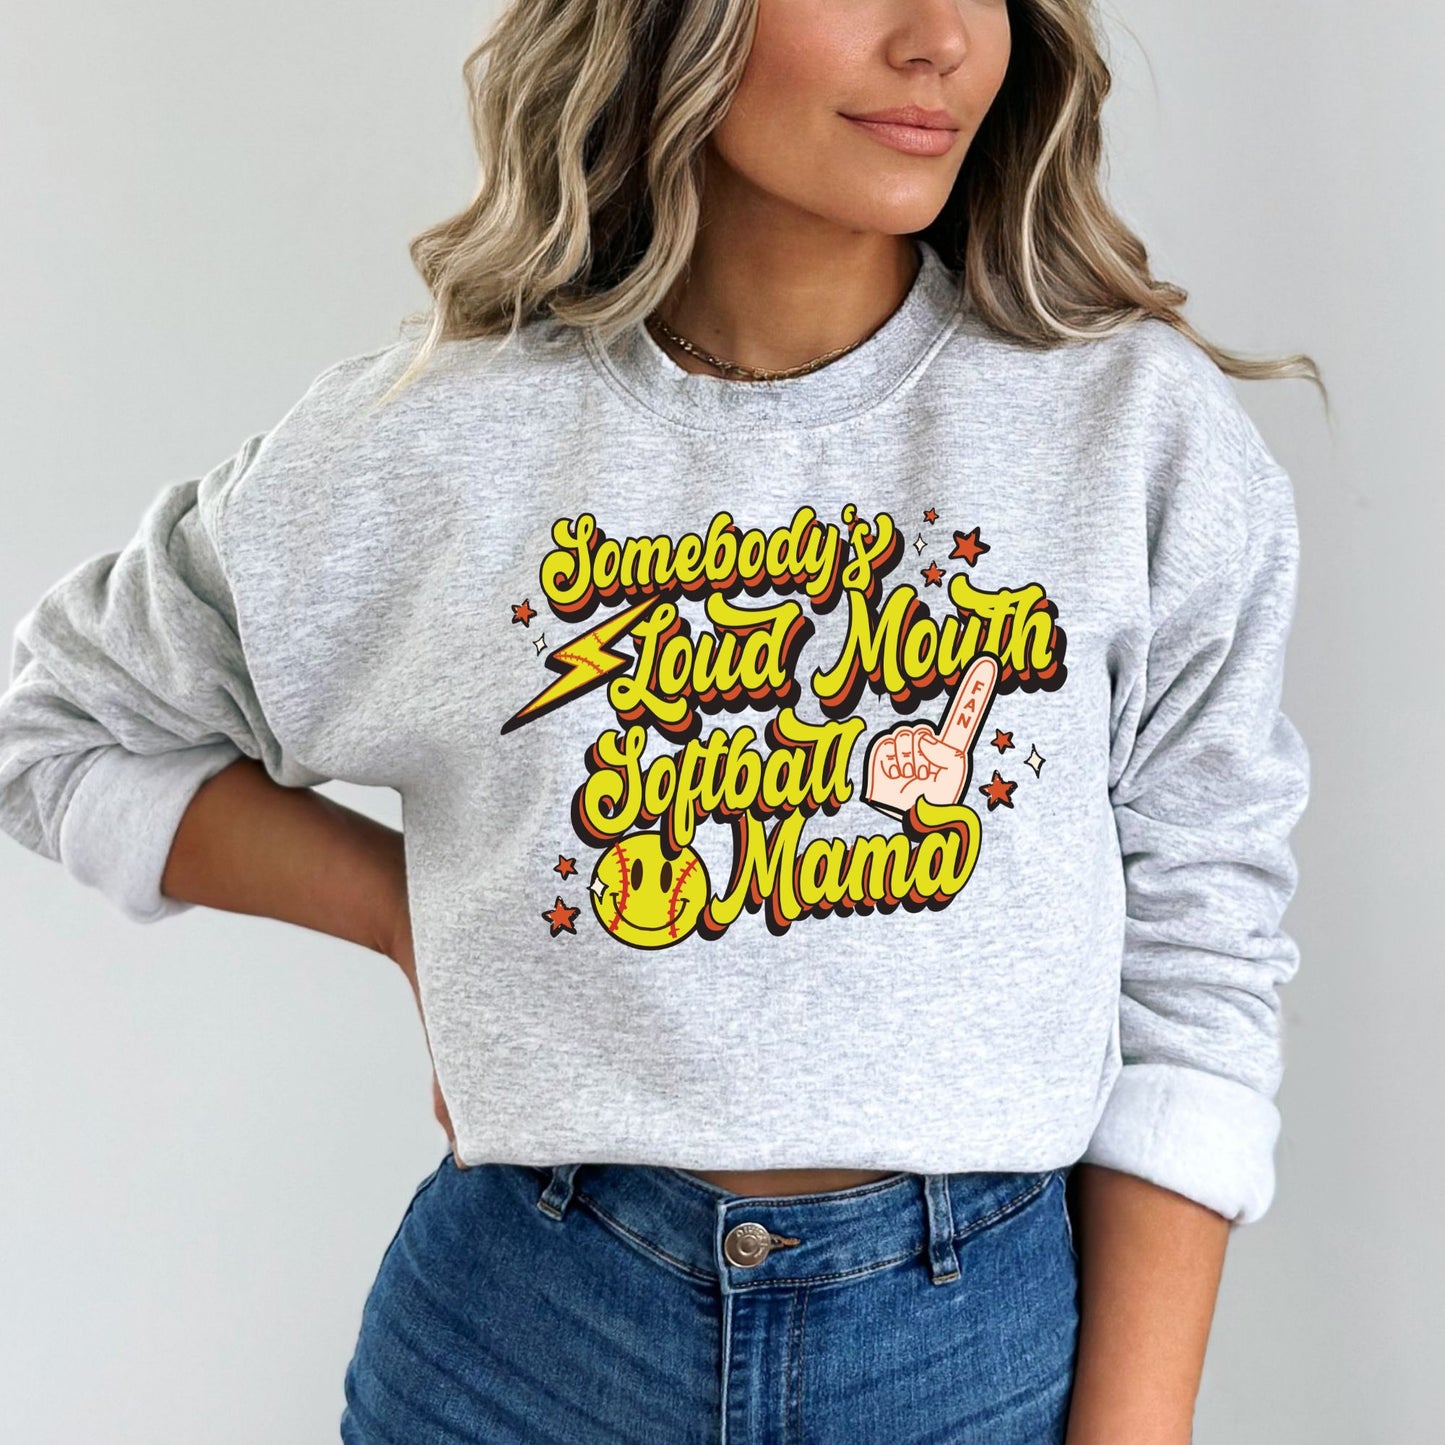 Somebody's Loud Mouth Softball Mama Sweatshirt